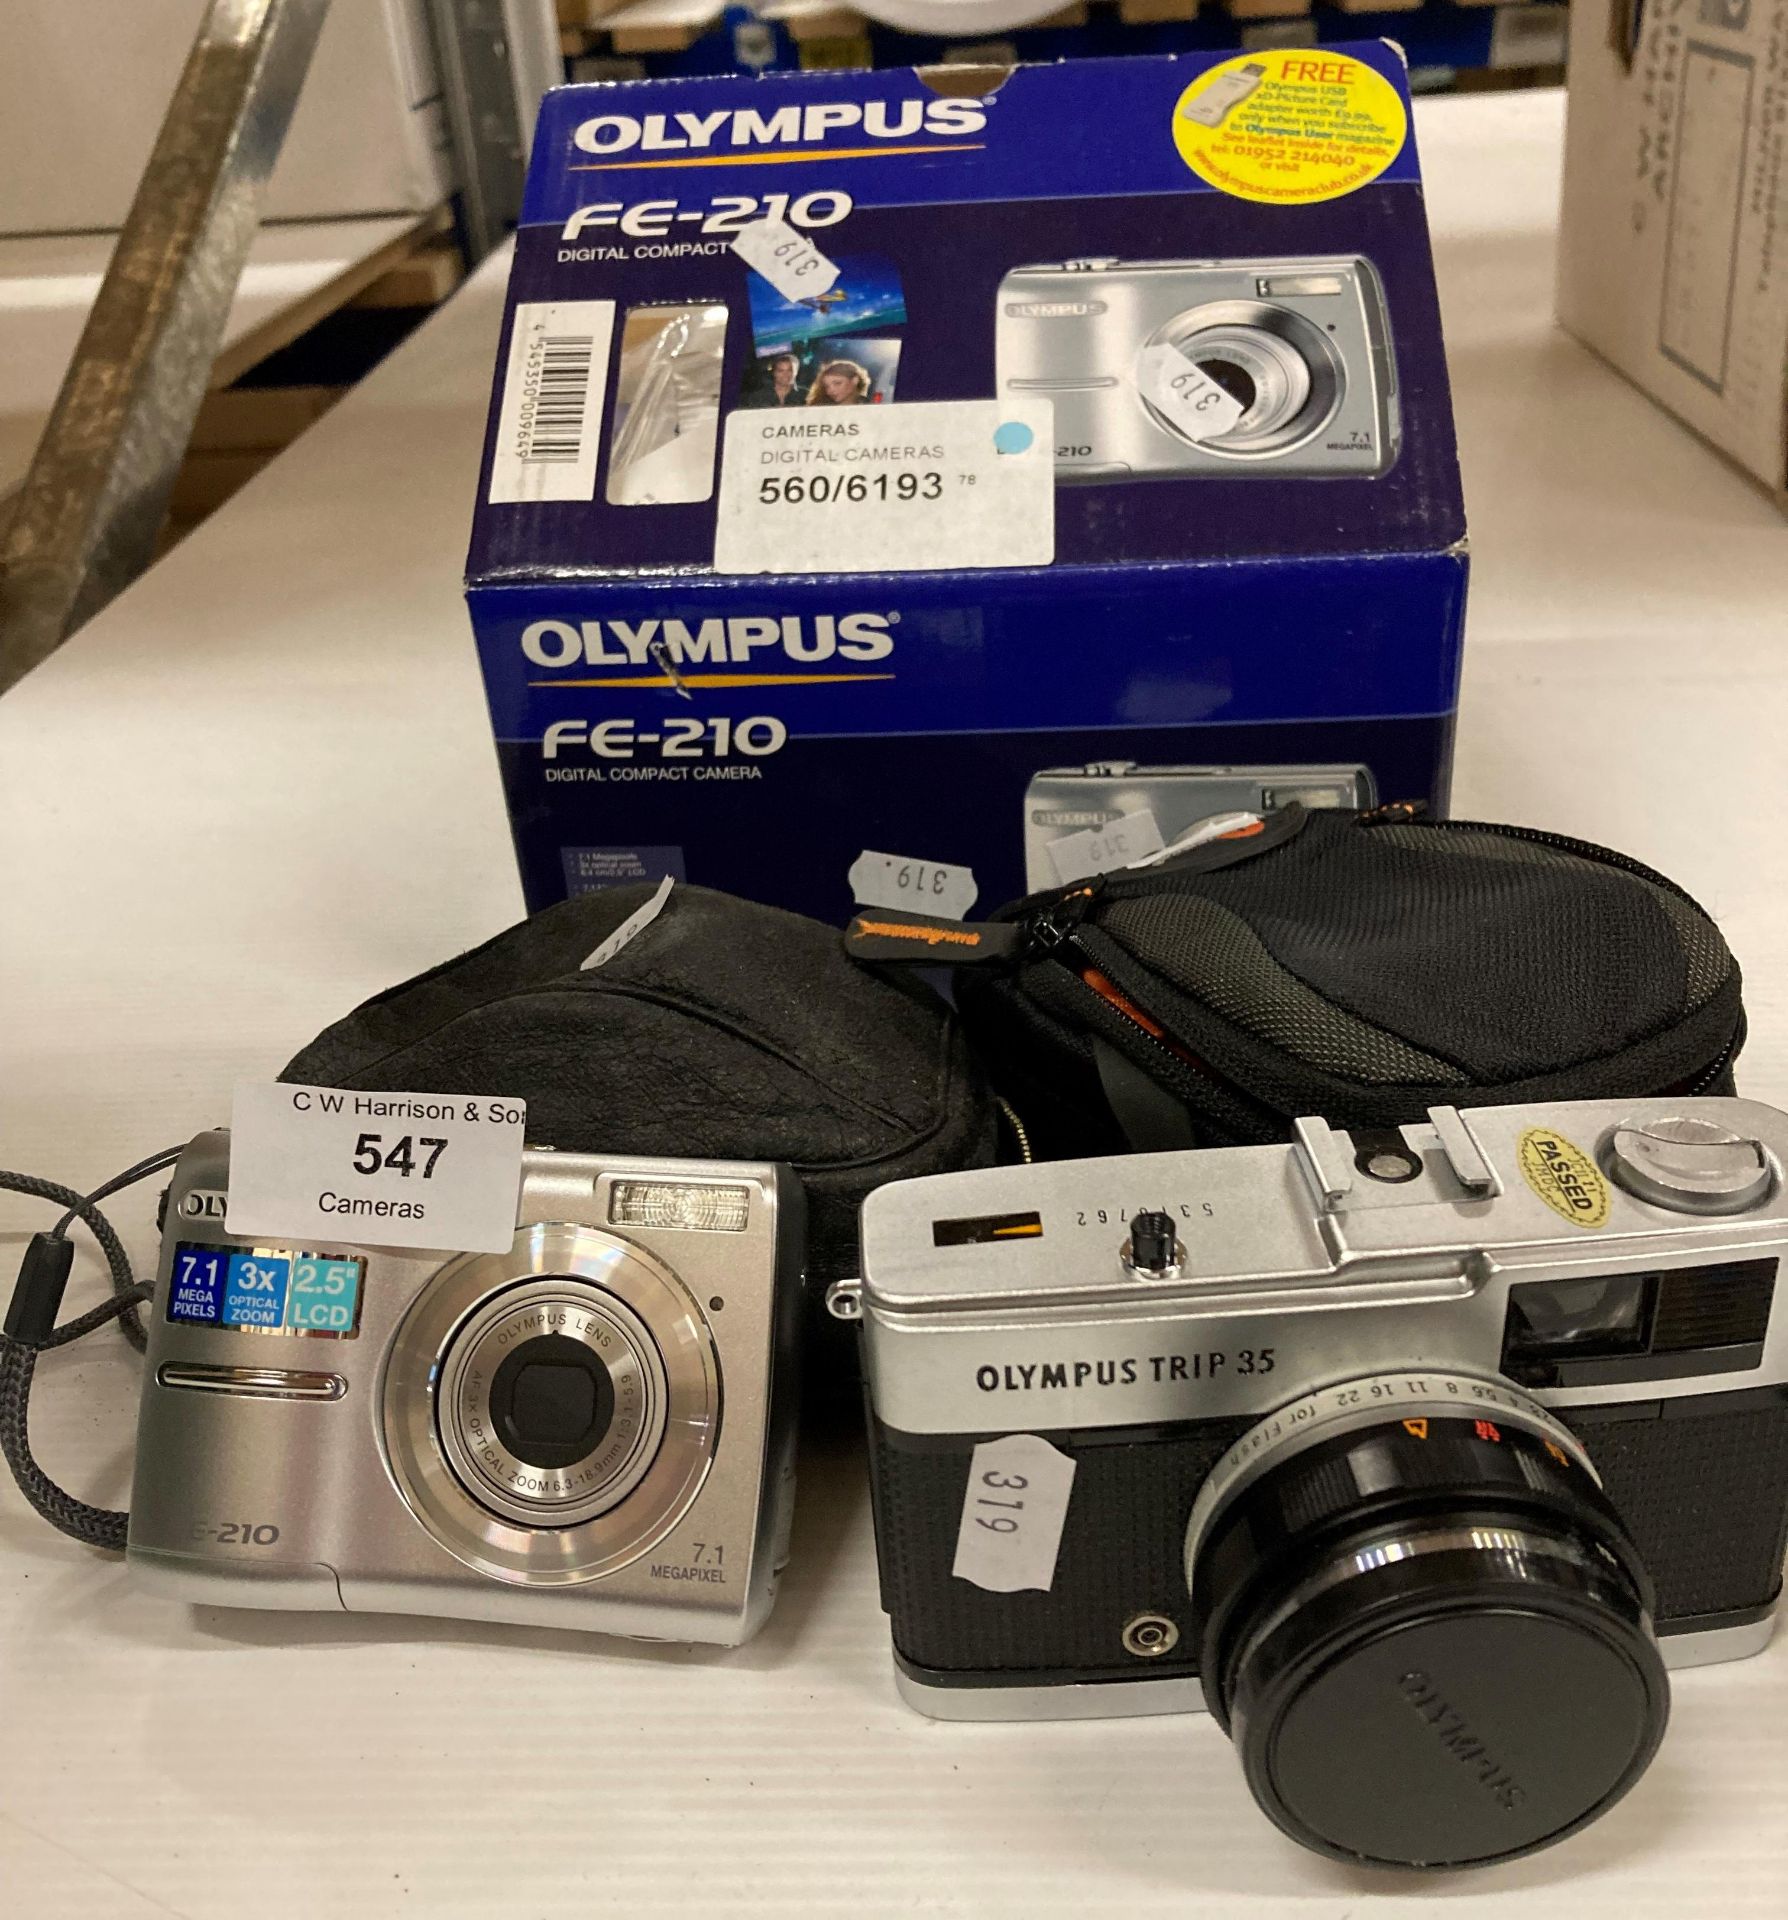 Olympus FE-210 compact digital camera, Olympus Trip 35 camera,